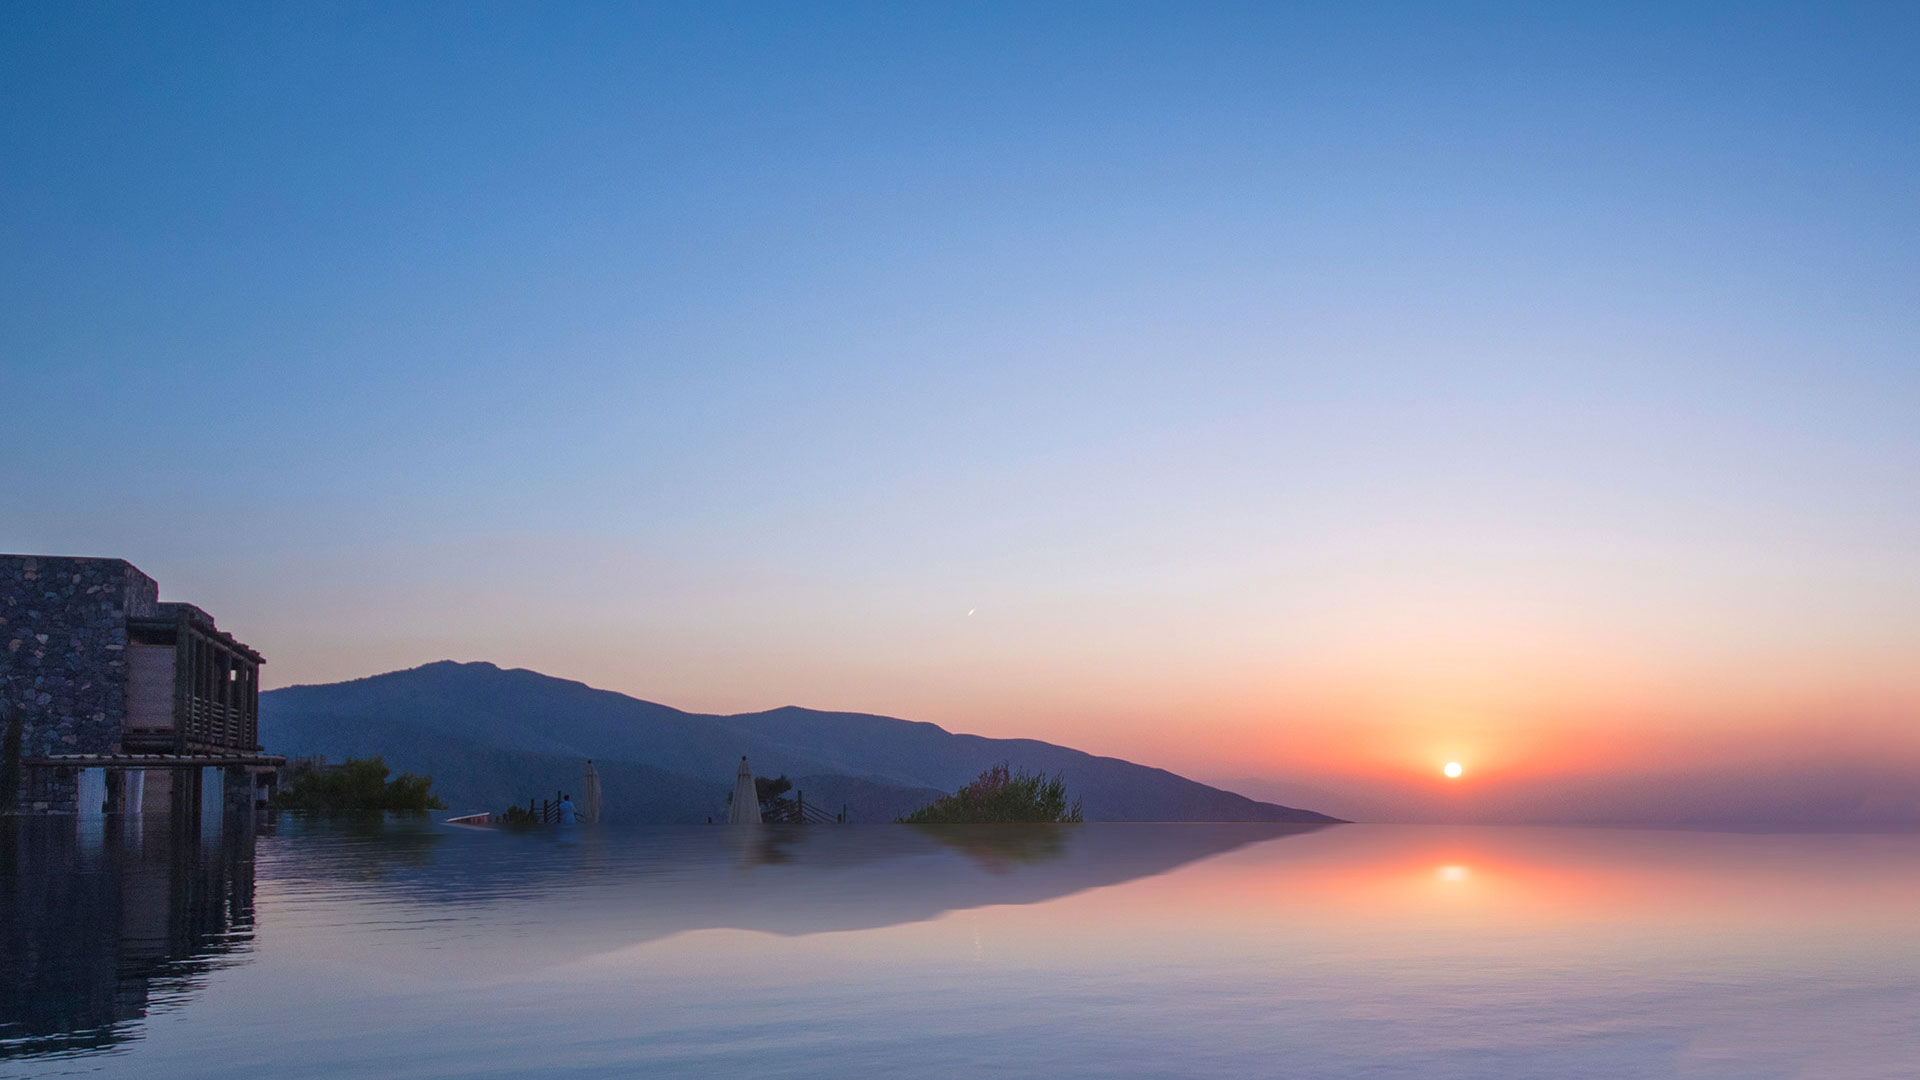 Oman Sonnenuntergang. Luxusreise